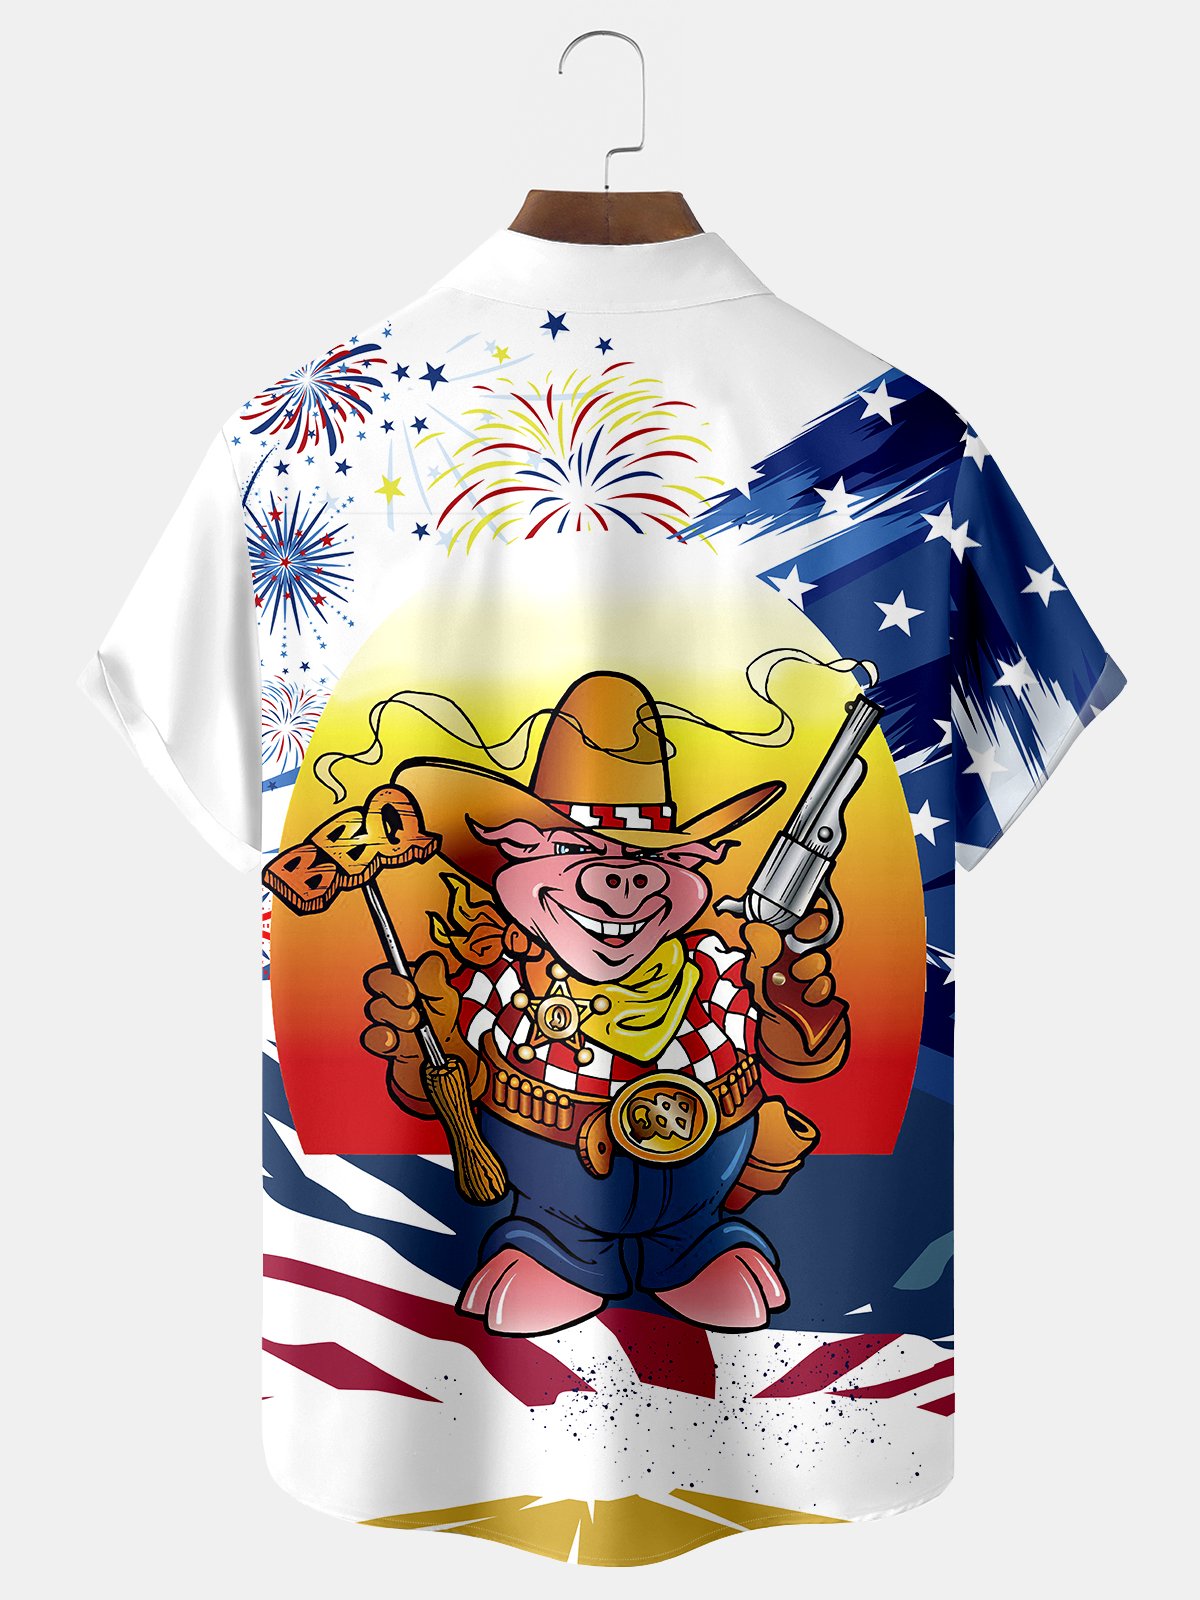 Royaura Flag Western Cowboy Bbq Pig Print  Men's Hawaiian Oversized Shirt with Pockets